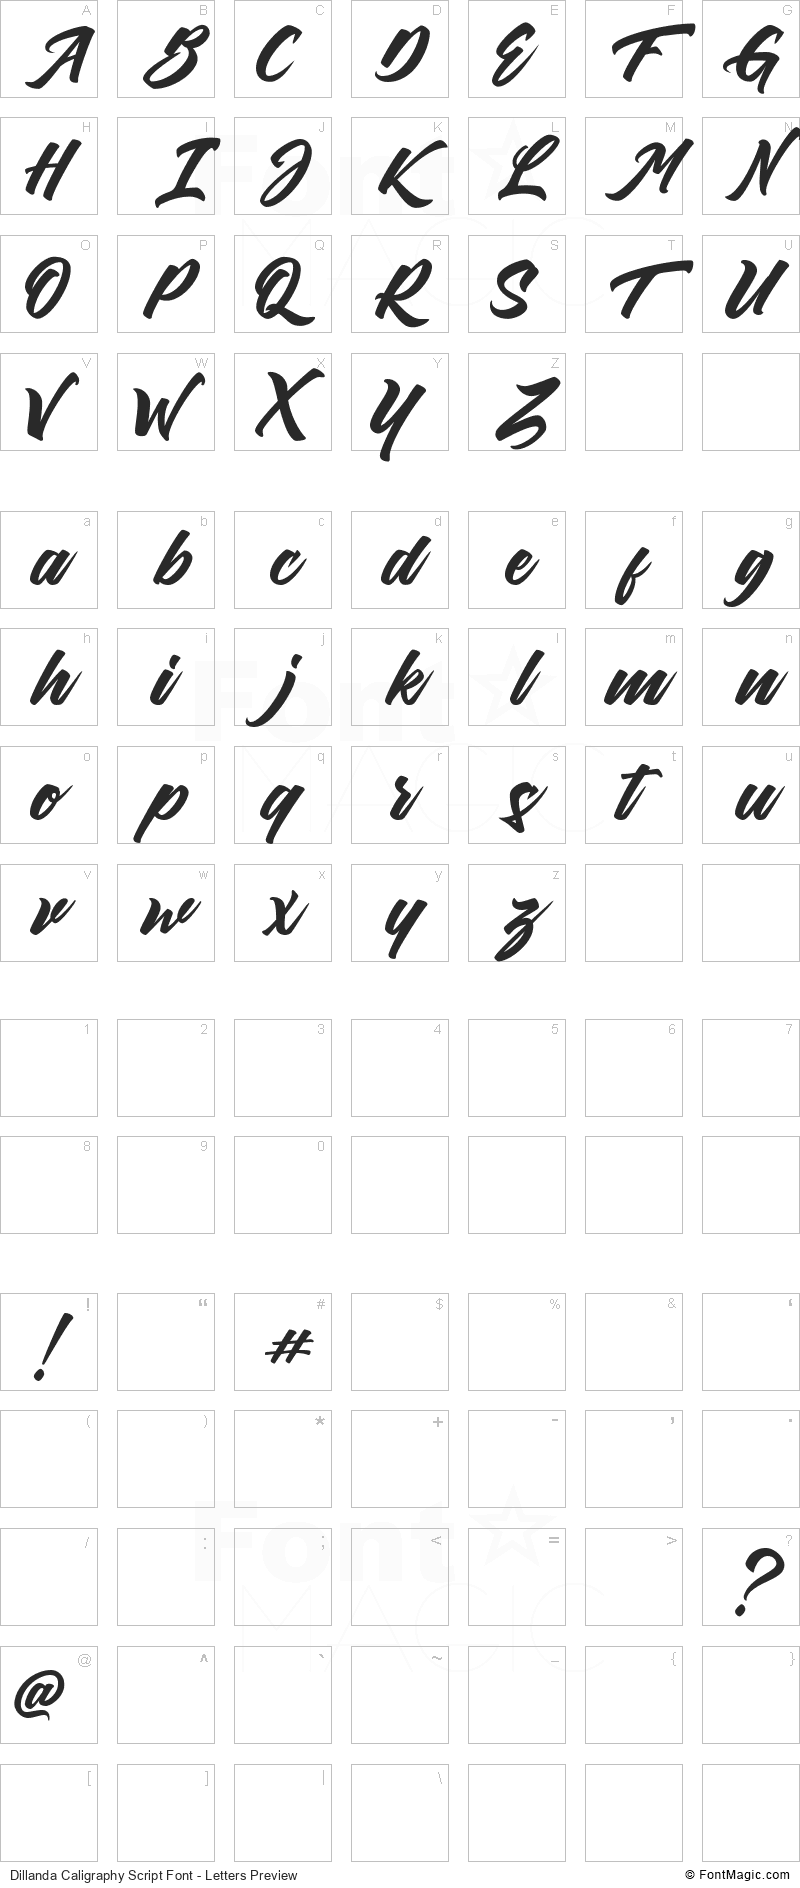 Dillanda Caligraphy Script Font - All Latters Preview Chart